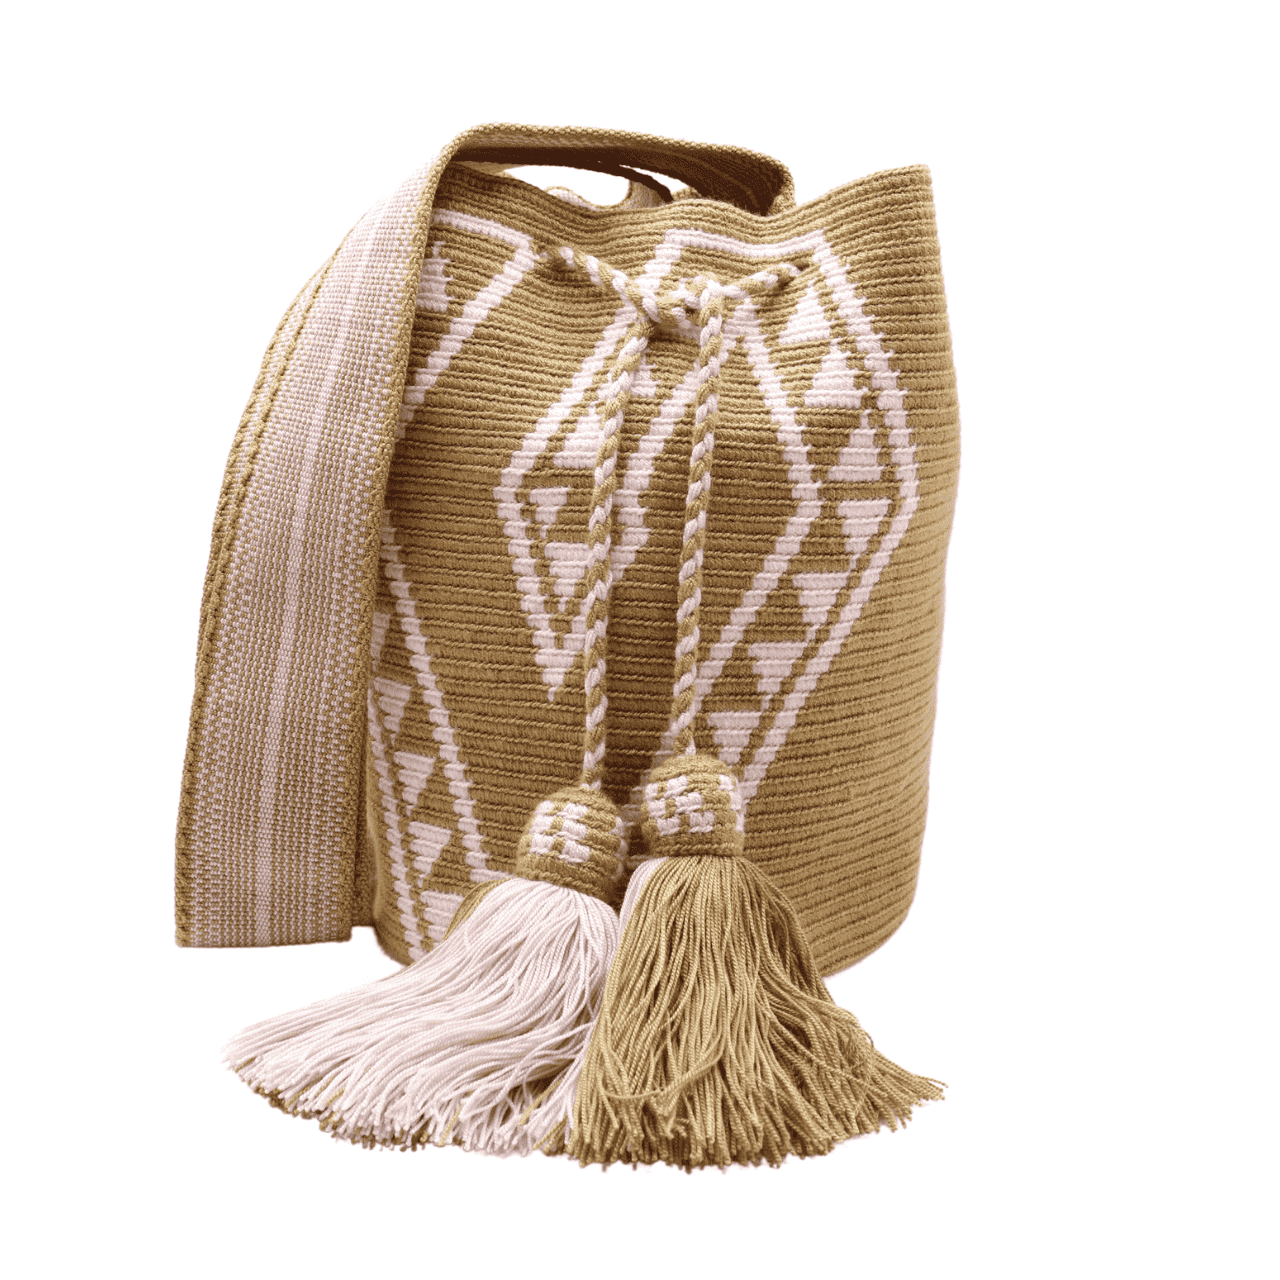 Handmade Rene Colombia Wayuu Bags in Brown and Pink Shades